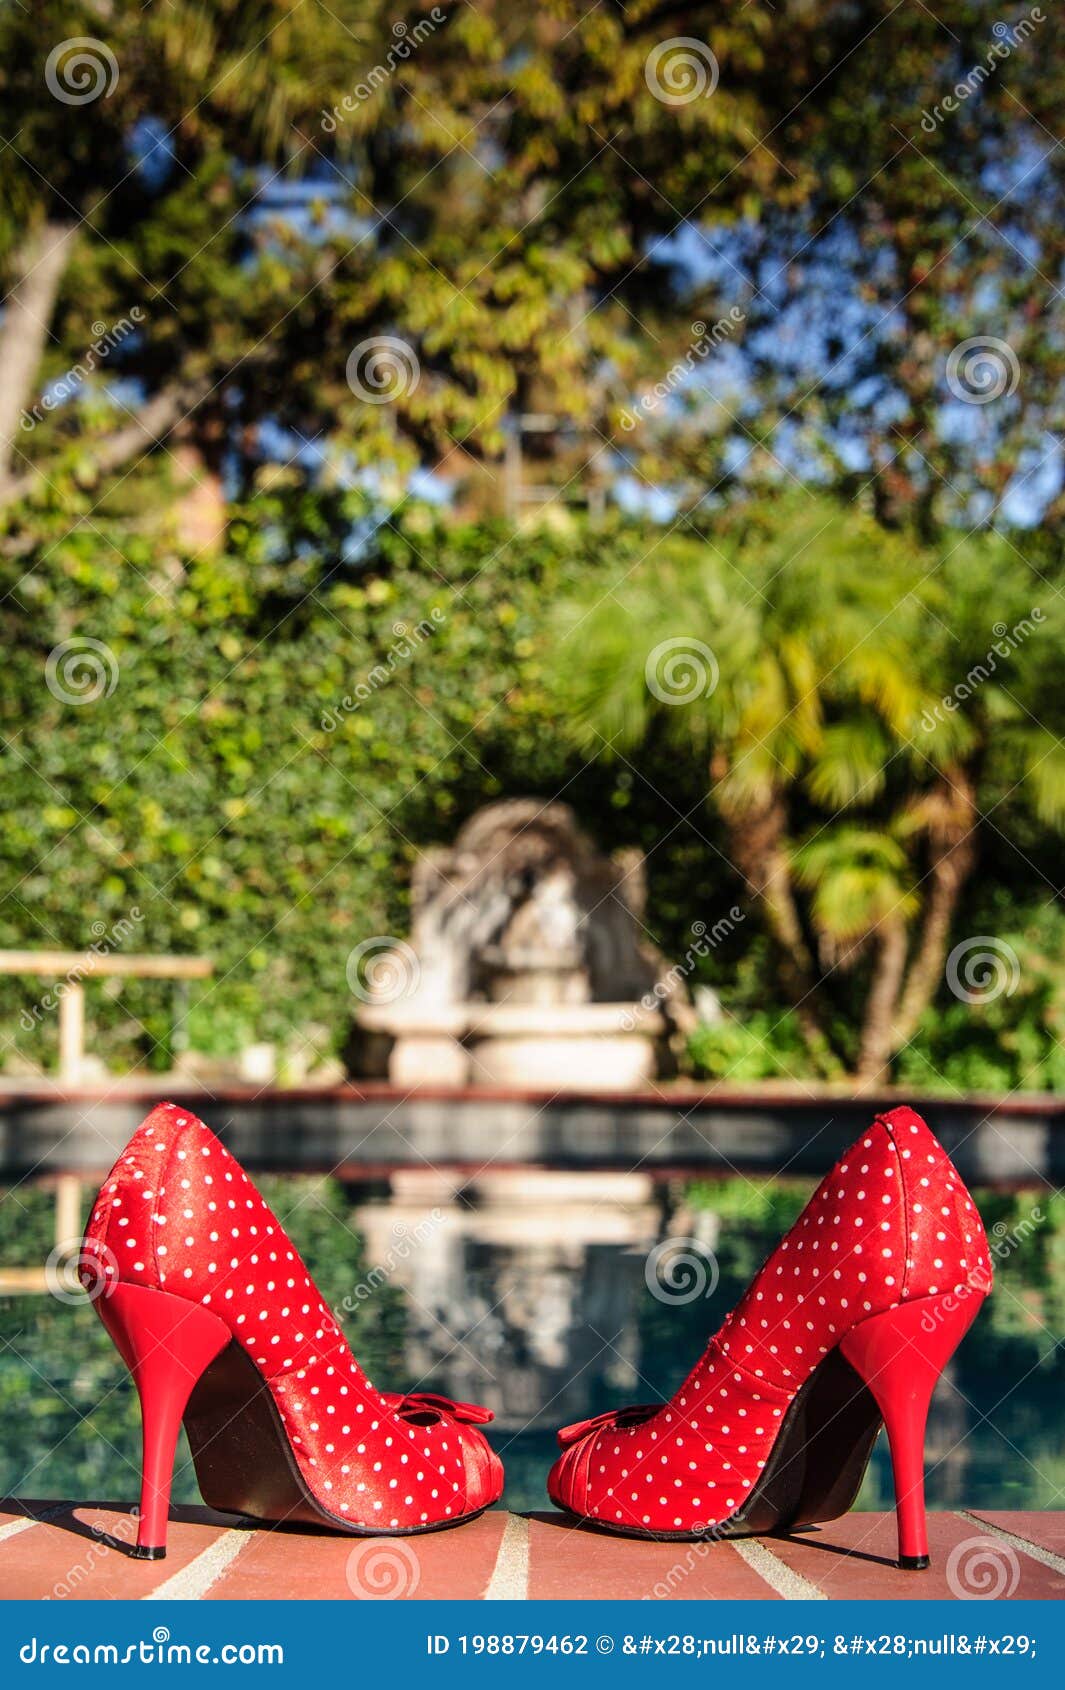 red polka dot high heels at pool`s edge